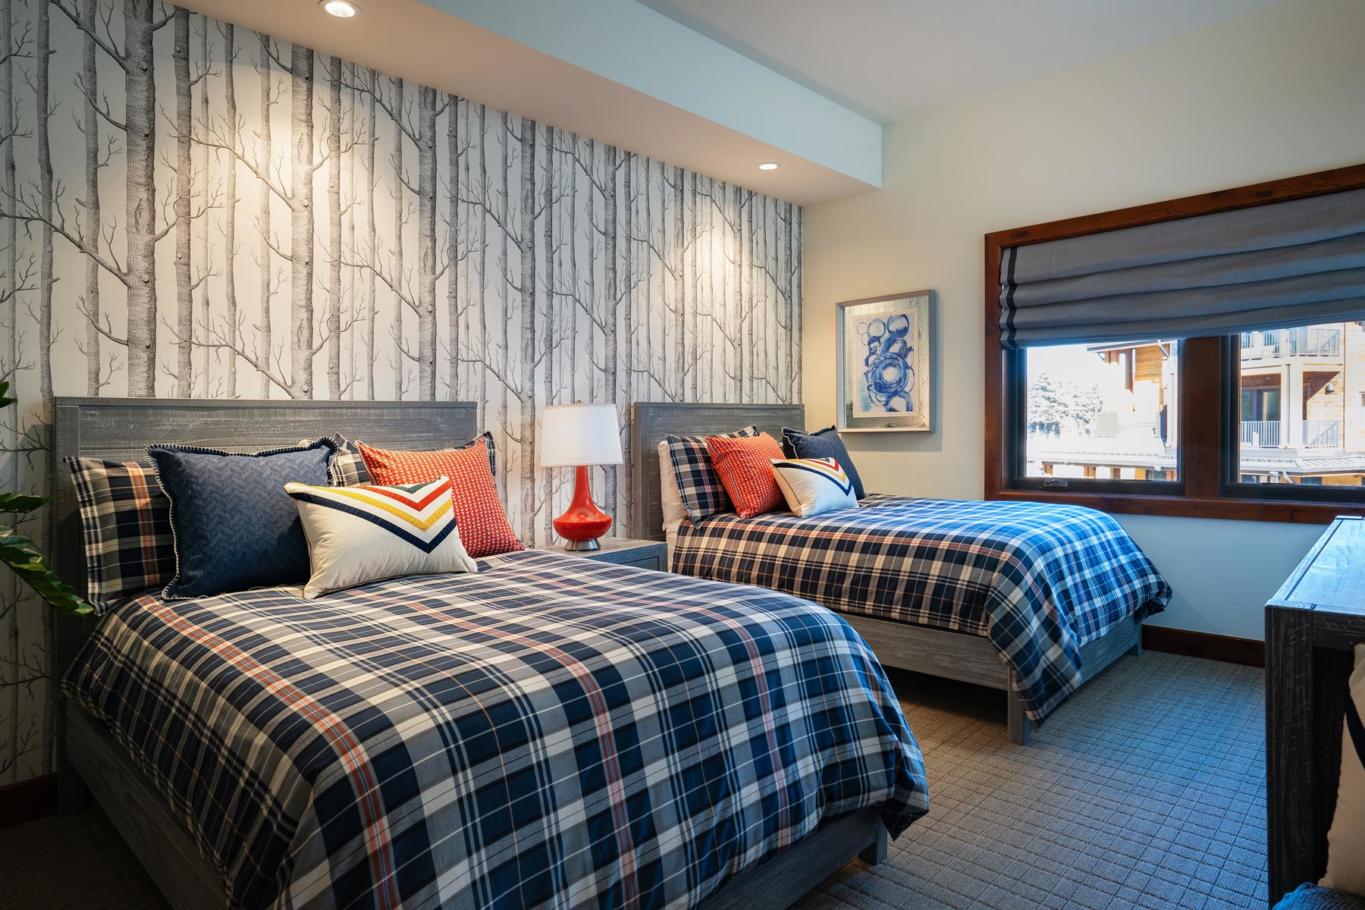 Zalanta Bed Room Design by Talie Jane Interiors